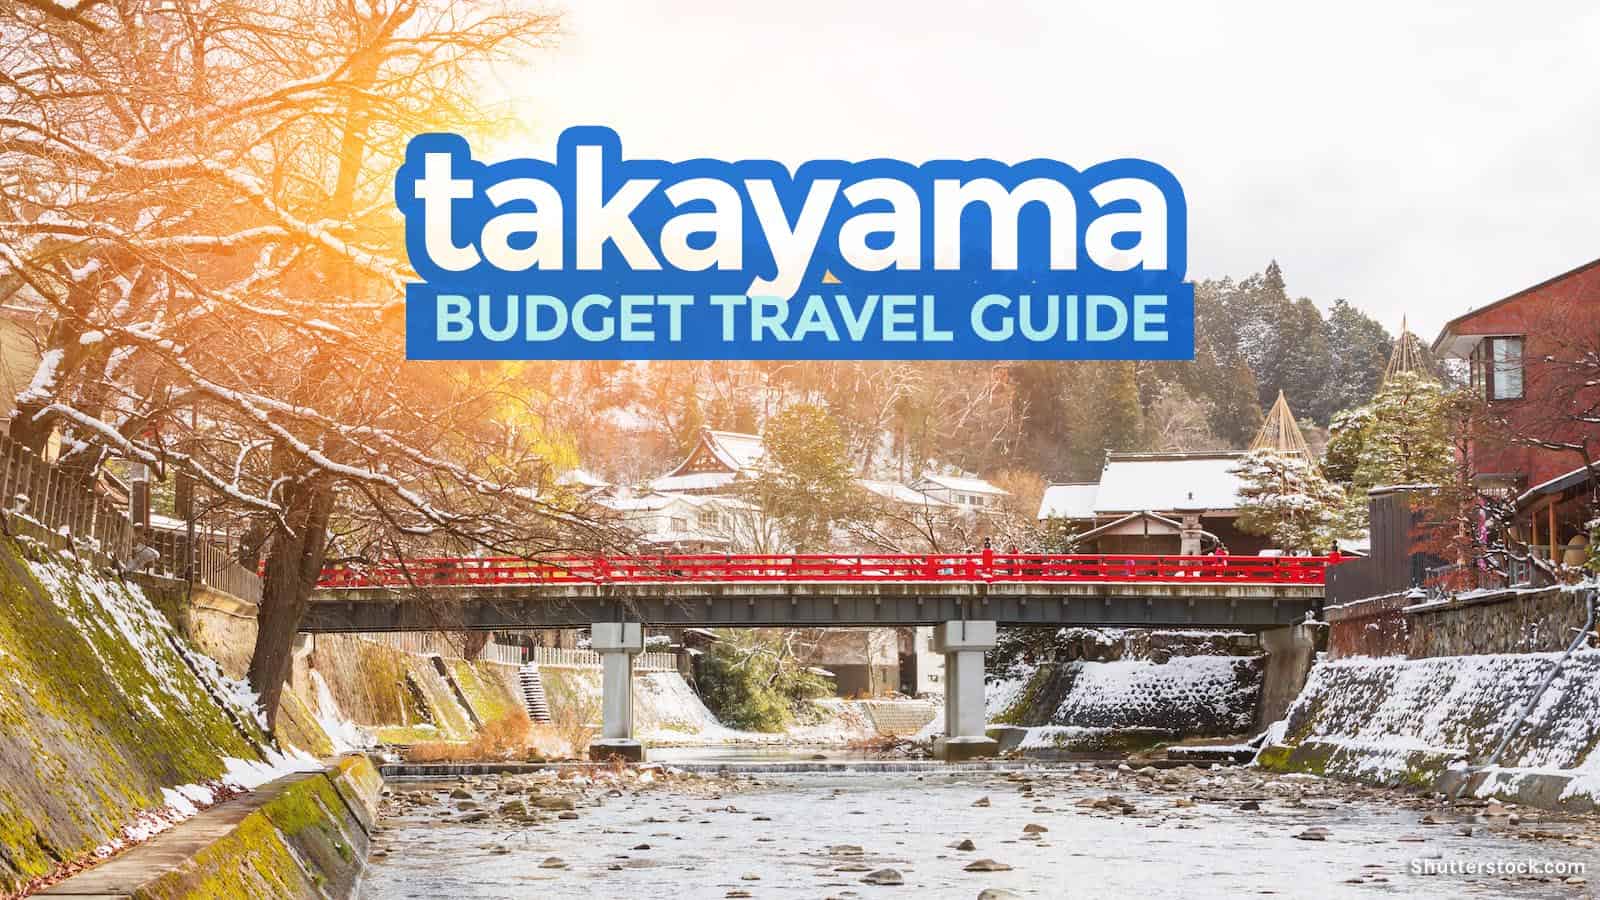 TAKAYAMA TRAVEL GUIDE: Budget Itinerary & Things to Do